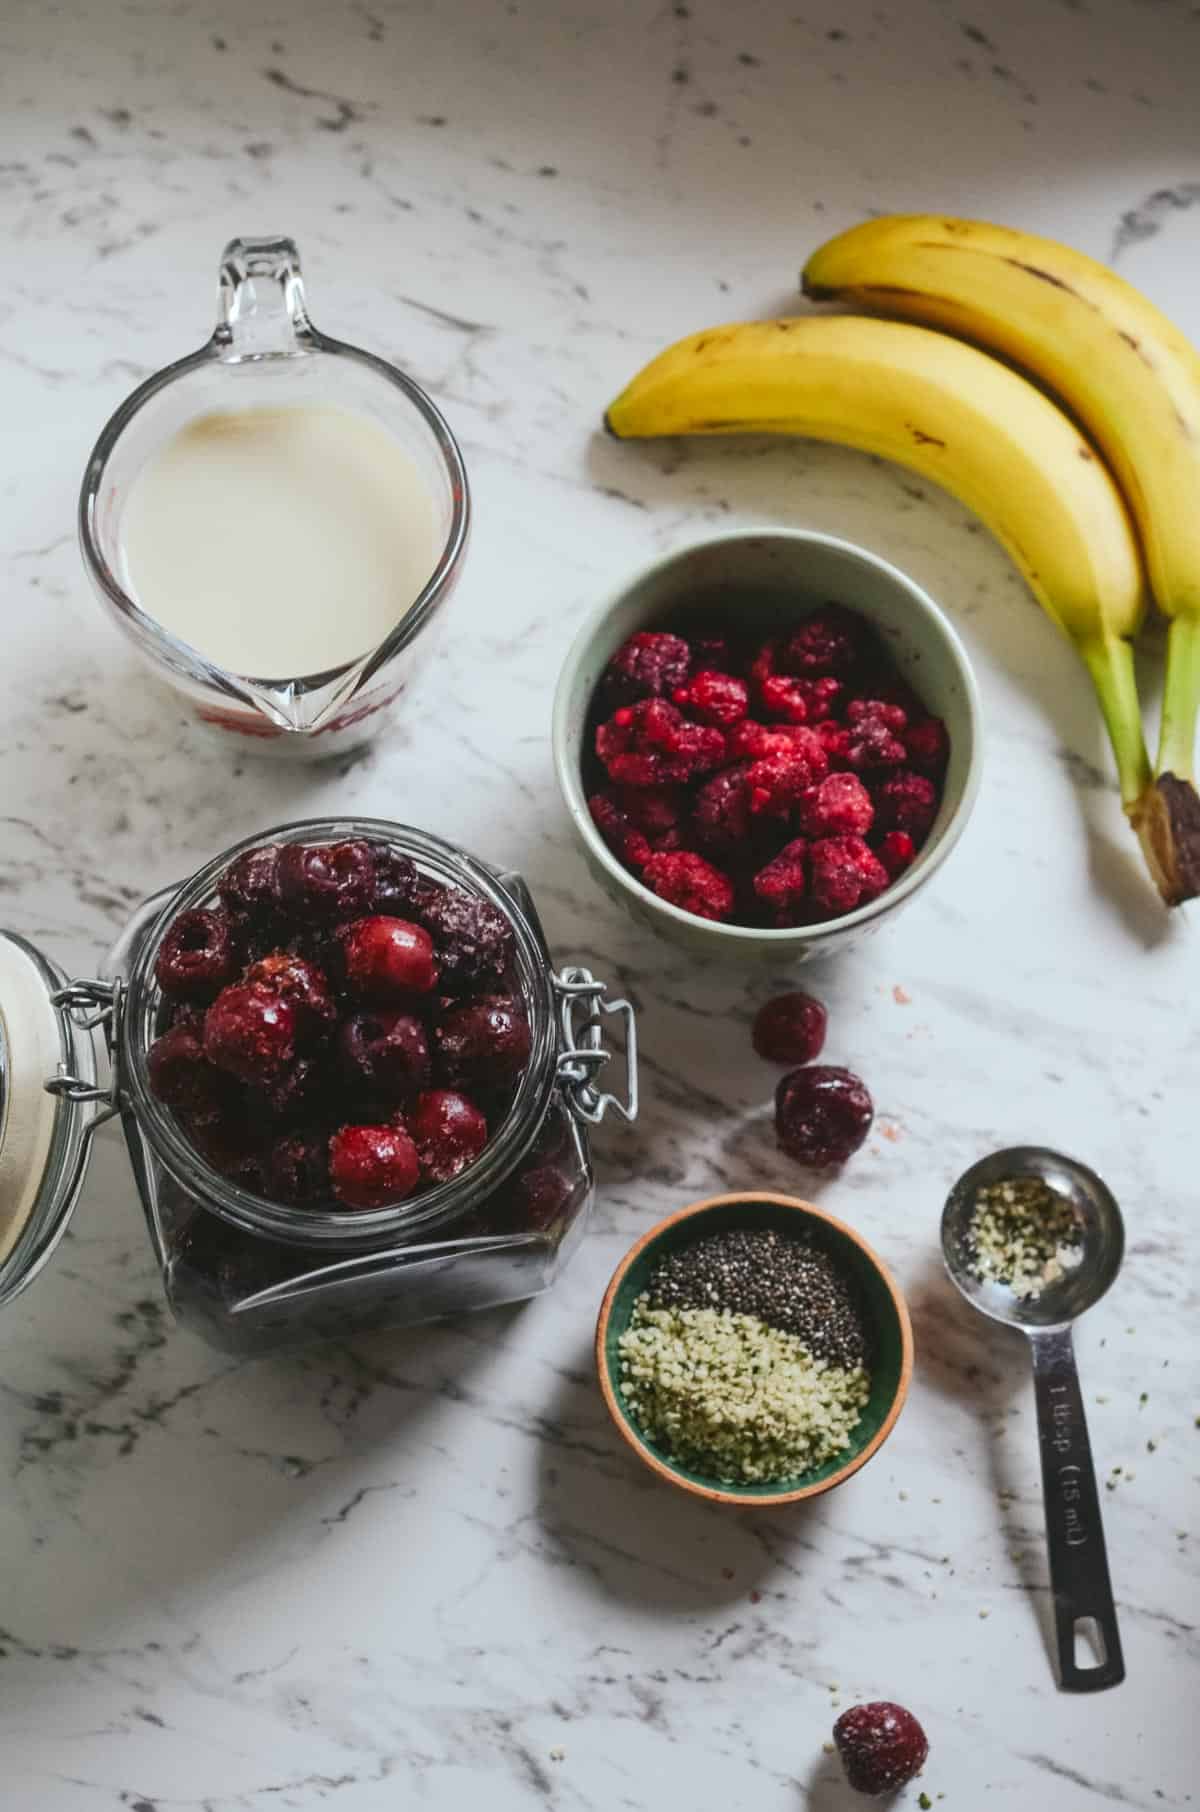 Ingredients for raspberry cherry smoothie in bowls: sweet dark cherries, frozen raspberries, almond milk, chia seeds, hemp hearts, and bananas.